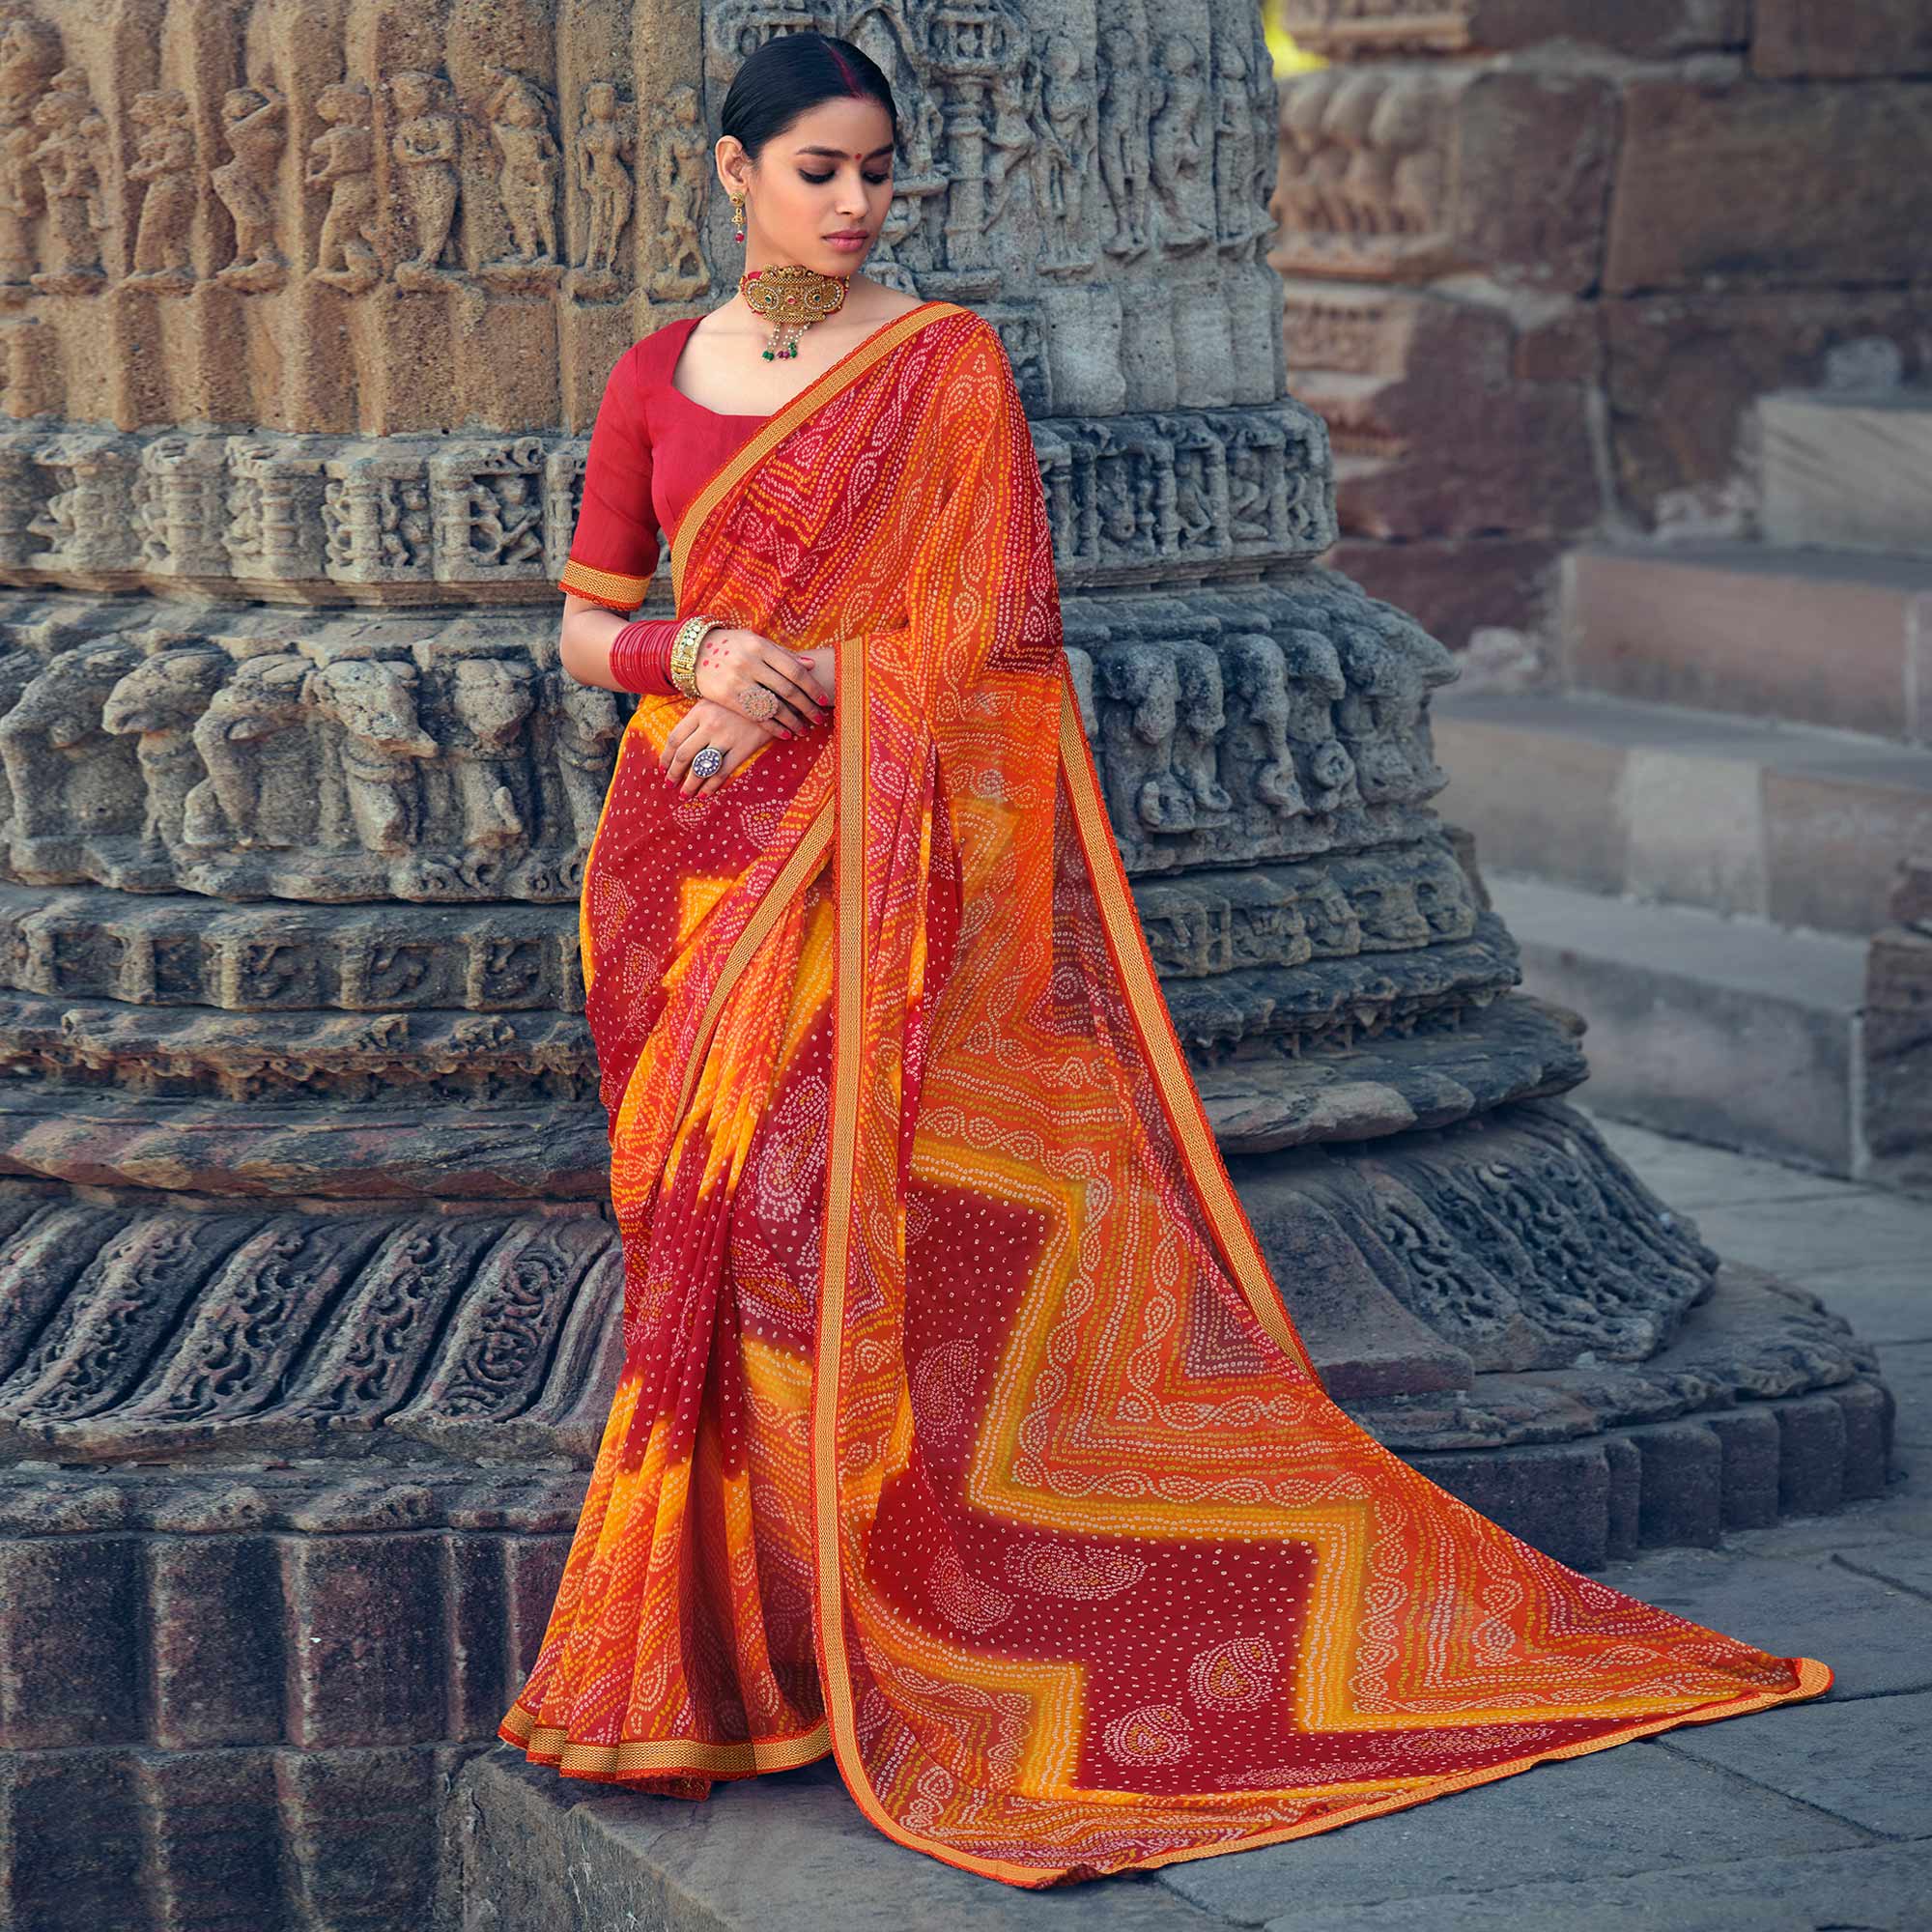 Old Saree reuse ideas || Convert silk saree into new dress designs || Kurti  from saree ideas 2020 - Y… | Stitching dresses, New designer dresses, Silk  kurti designs